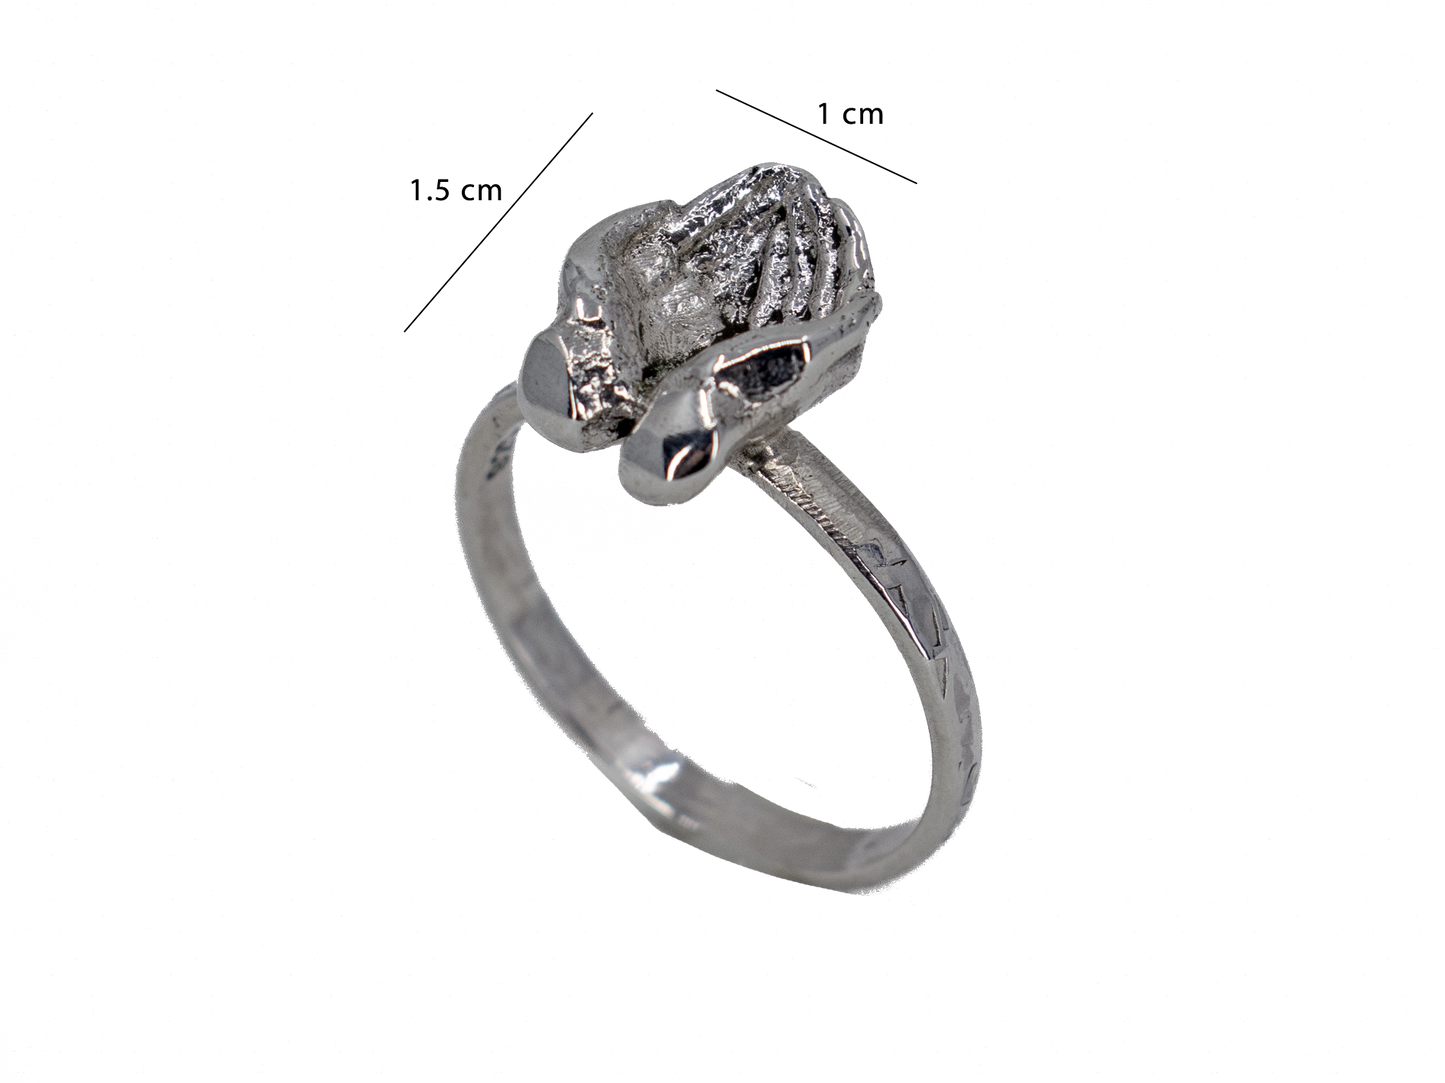 Şükür - El Yapımı 925 Ayar Gümüş Yüzük